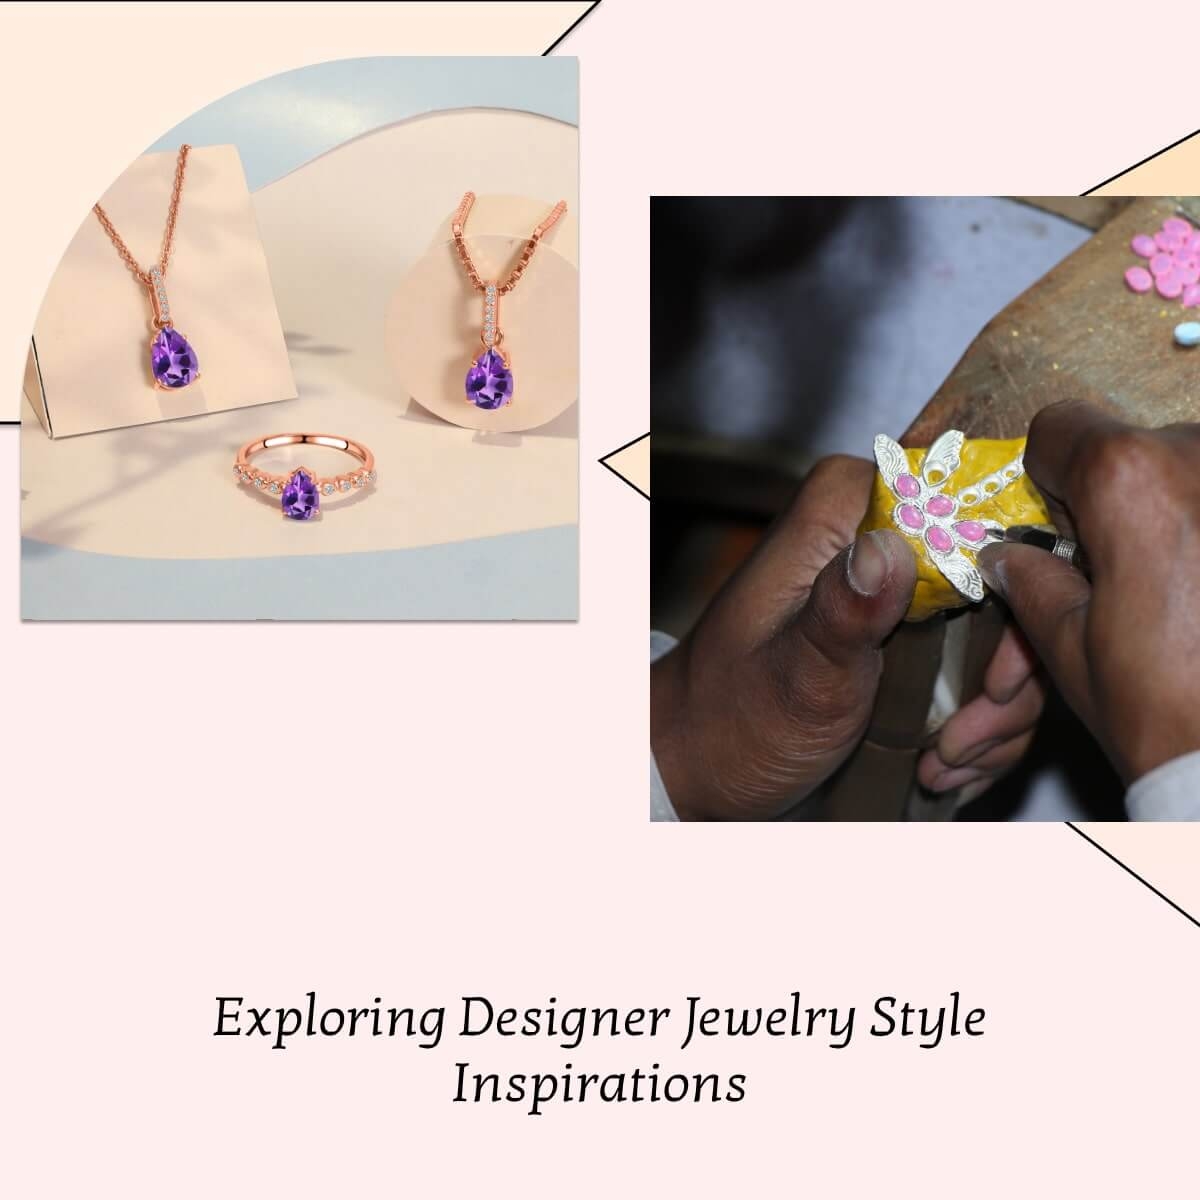 Ideas for Incorporating Designer Jewelry